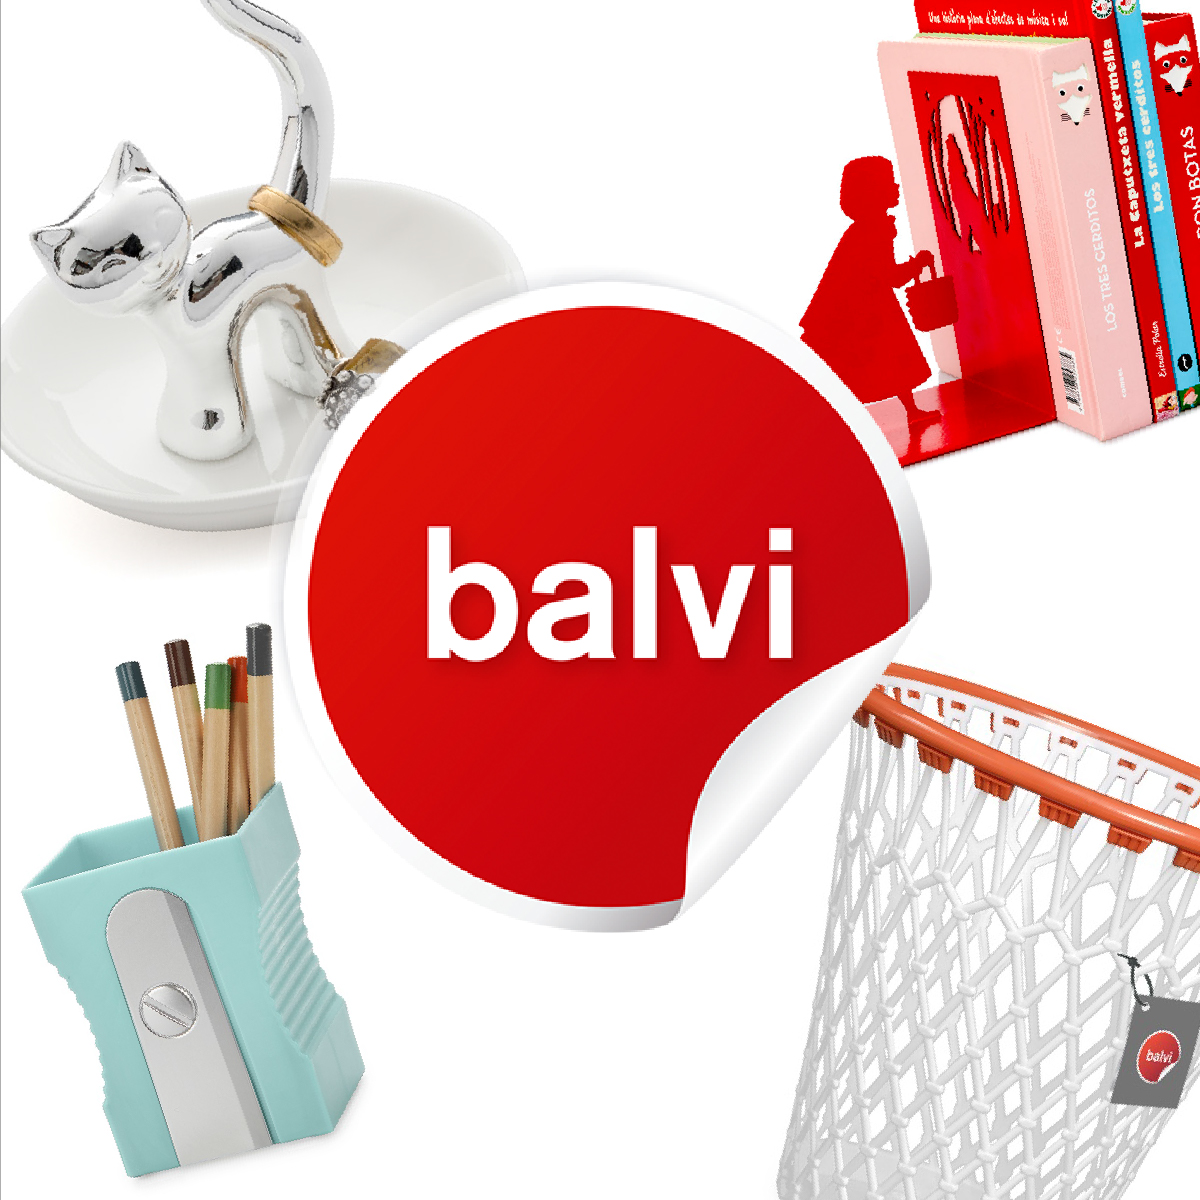 balvi／バルビ